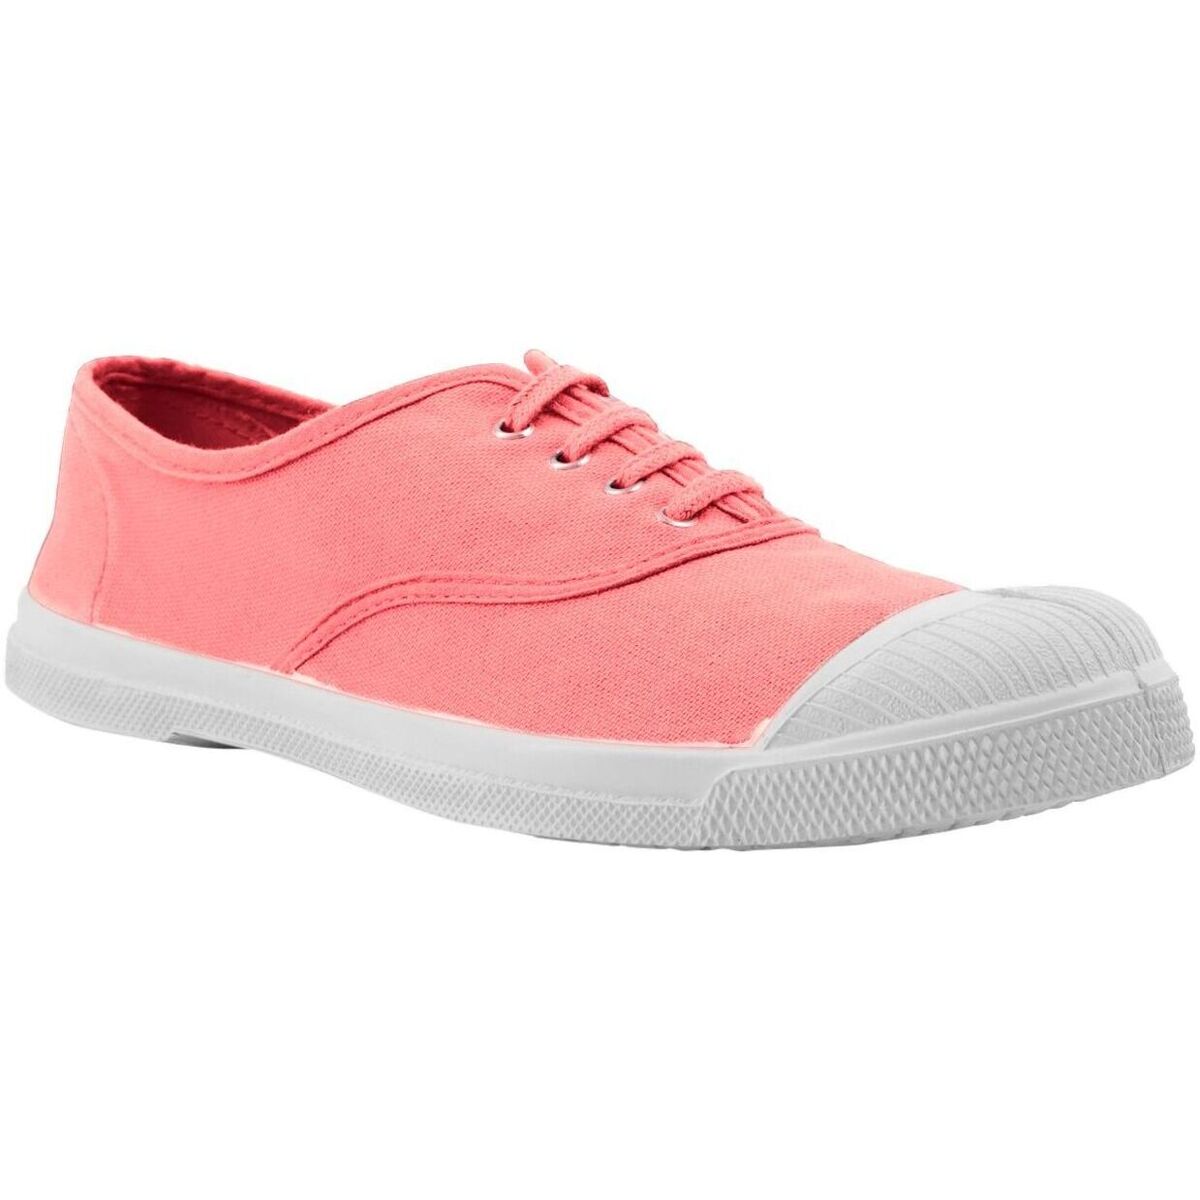 Sko Dame Lave sneakers Bensimon Tennis lacets Pink